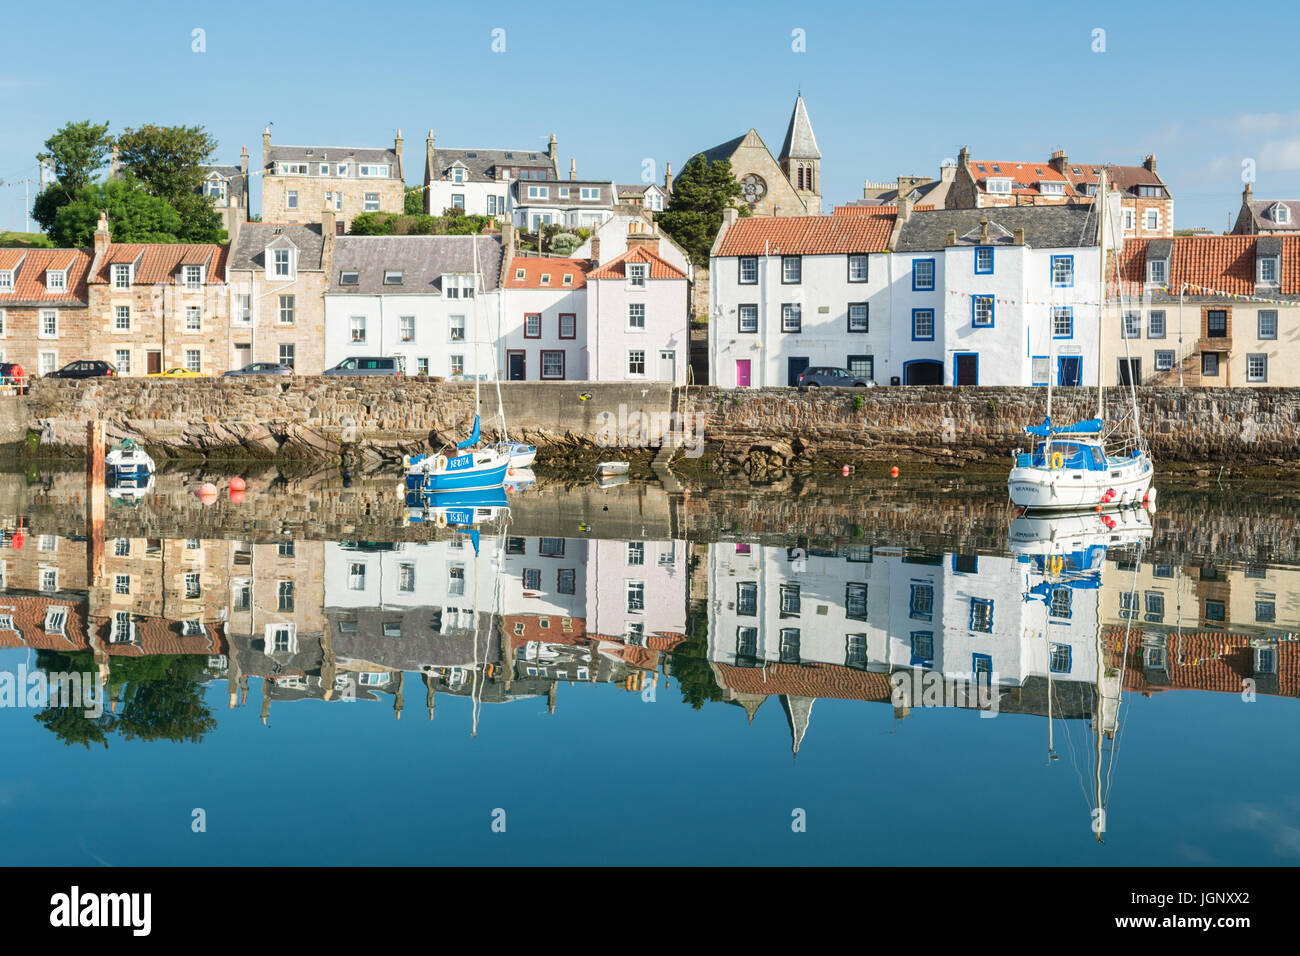 St Monan's Fife, Scottish fishing village reflections, East Neuk of Fife, Scotland, UK Stock Photo